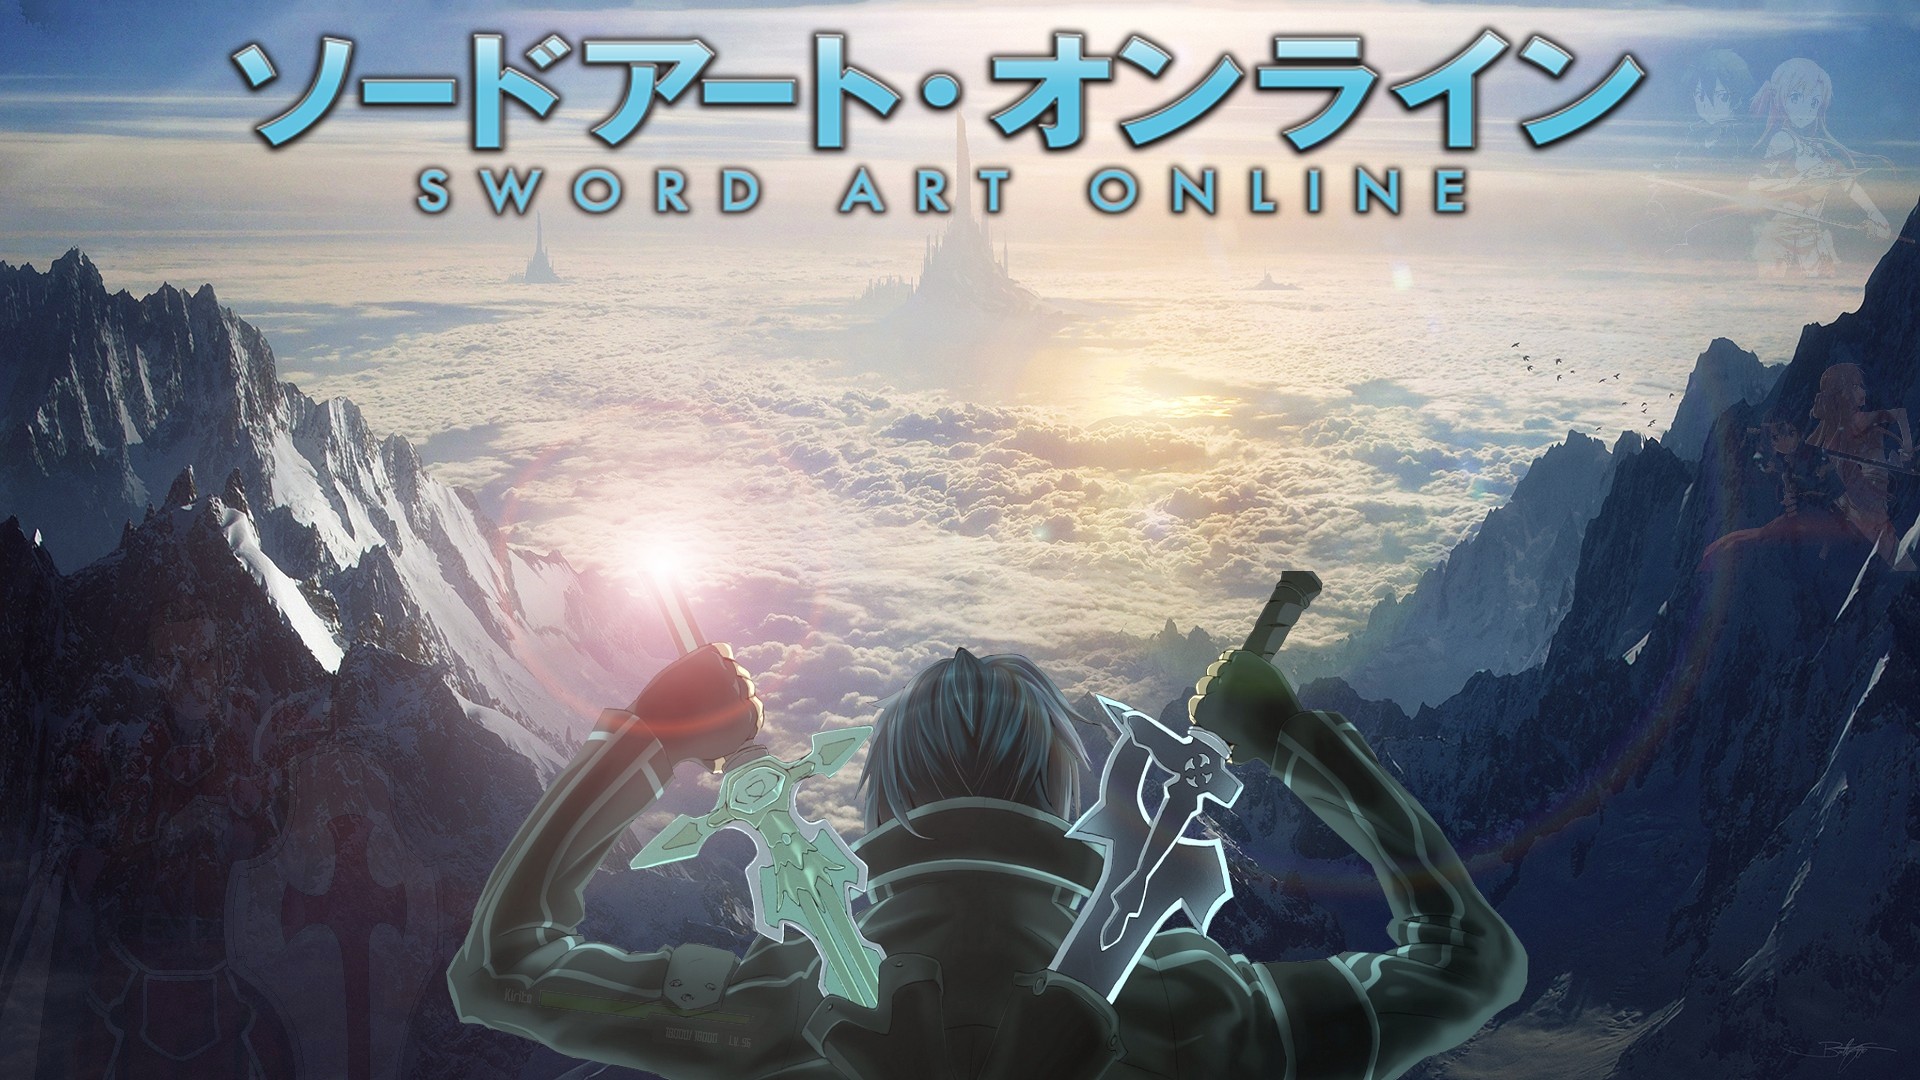 ImageMade This Sword Art Online Wallpaper.